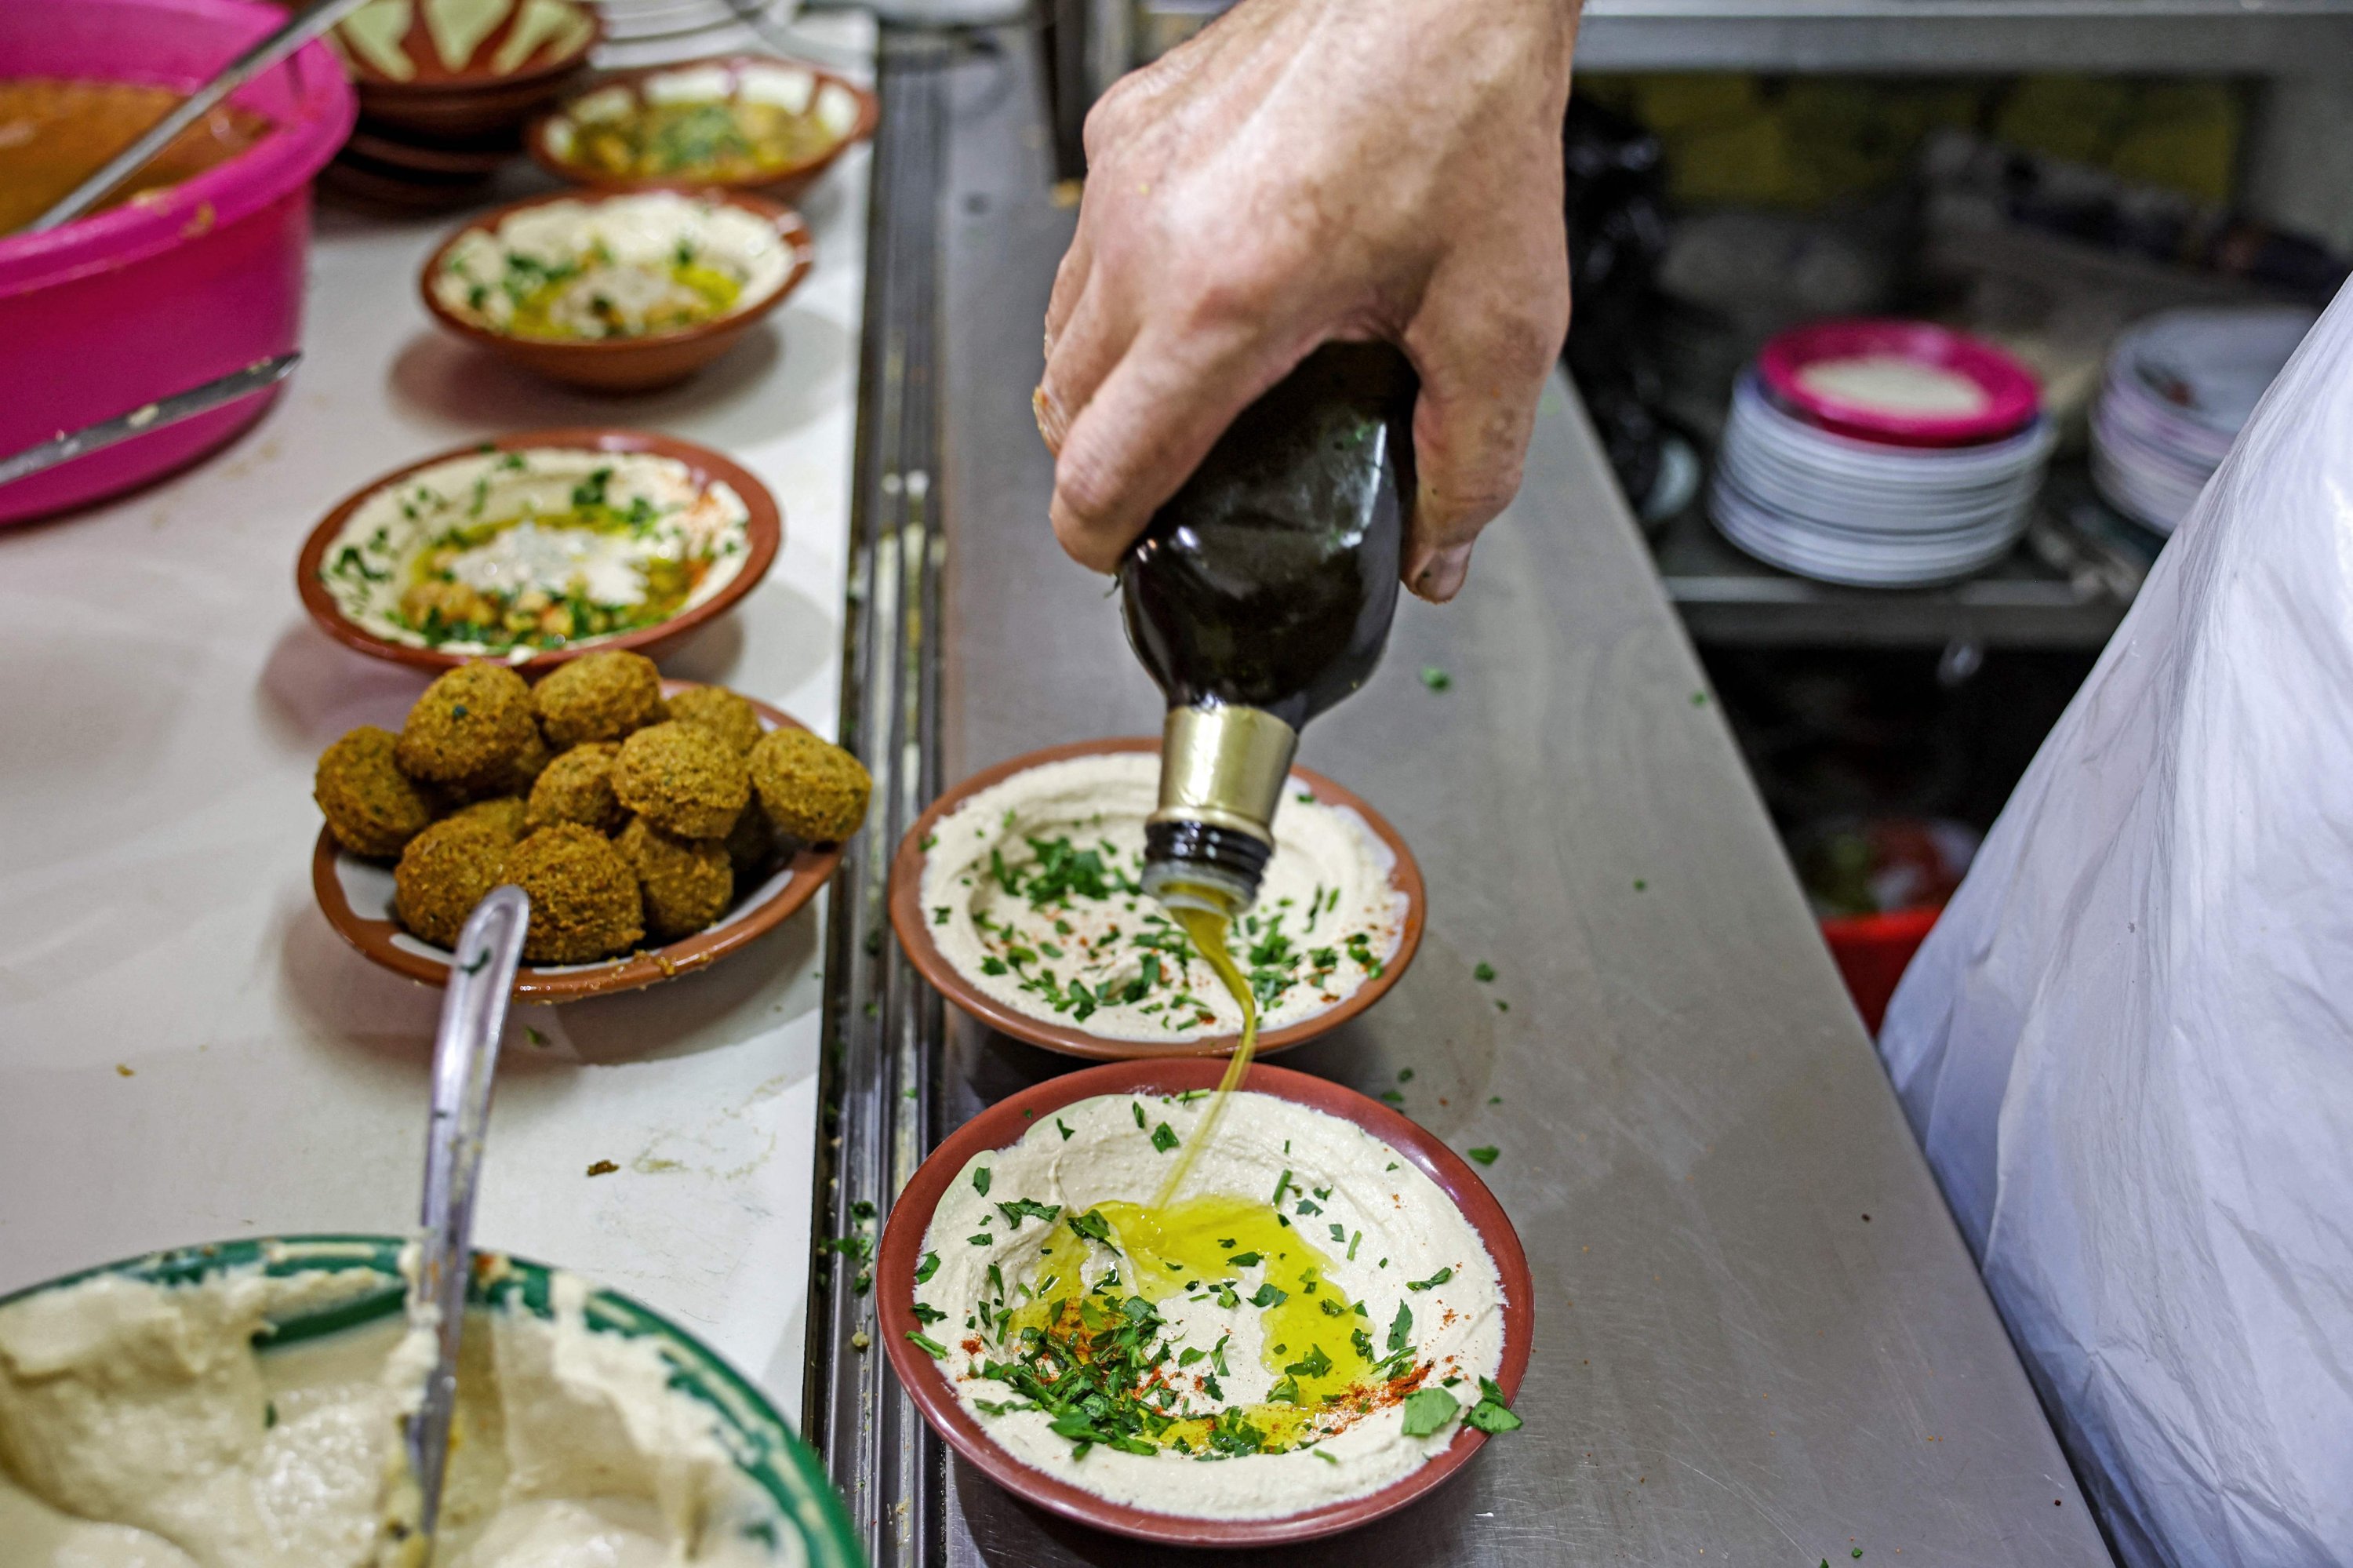 Seorang juru masak menyiapkan sepiring hummus untuk disajikan kepada klien di sebuah restoran di Kota Tua Yerusalem, Palestina yang diduduki, 26 Juli 2022. (AFP Photo)